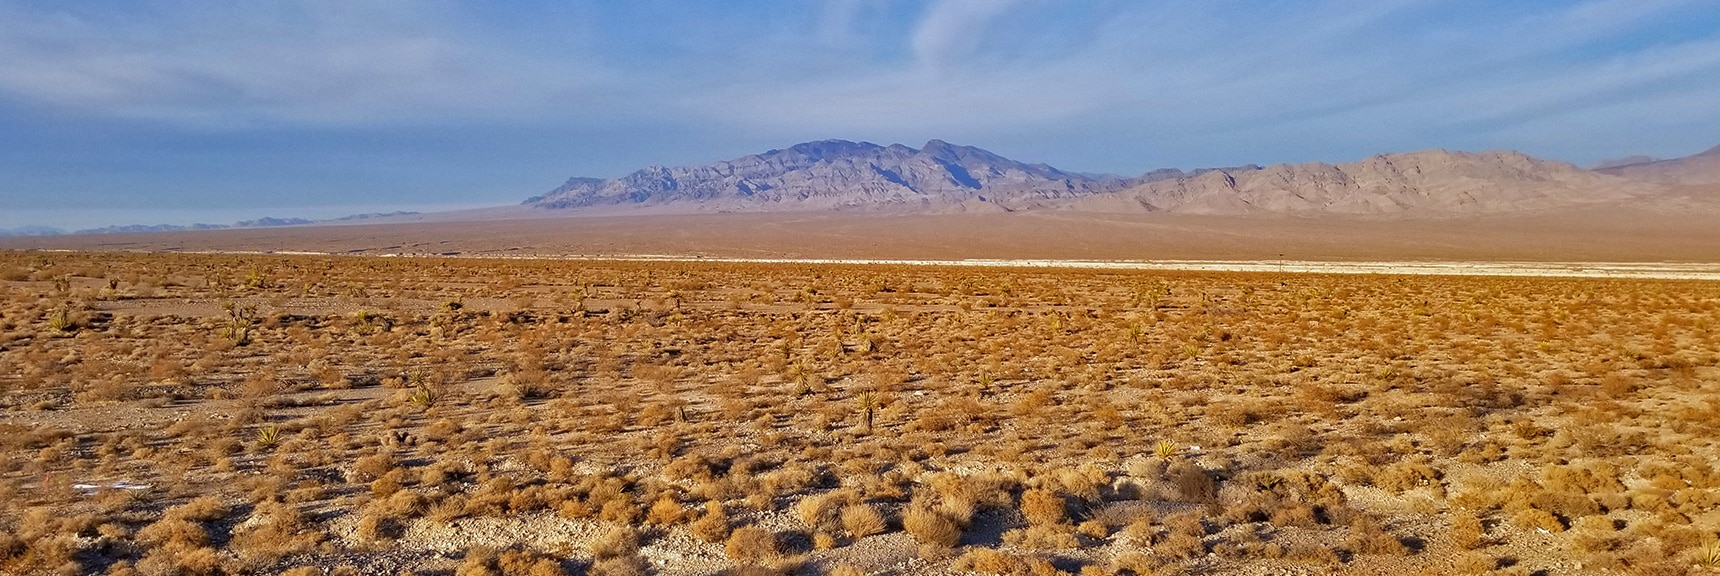 View North of Moccasin Toward Sheep Range | Snapshot of Las Vegas Northern Growth Edge on January 3, 2021